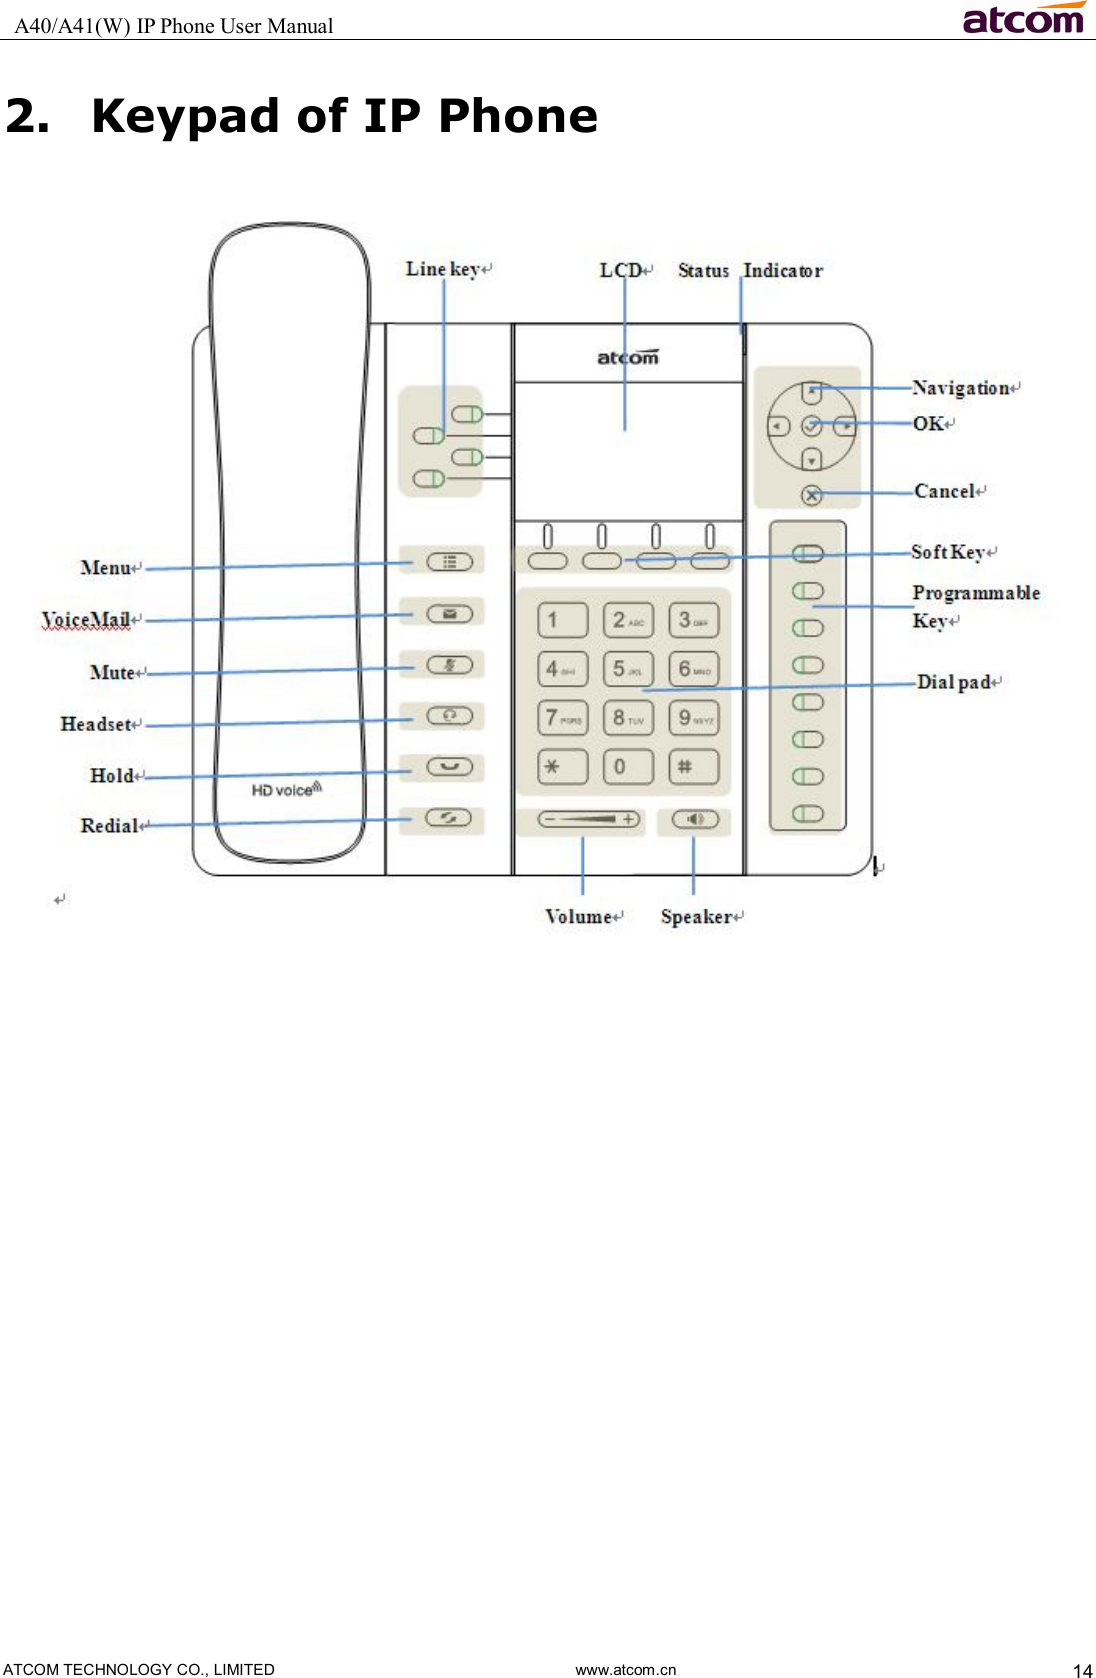   A40/A41(W) IP Phone User Manual                                                                     ATCOM TECHNOLOGY CO., LIMITED                              www.atcom.cn  14 2. Keypad of IP Phone                                                                     